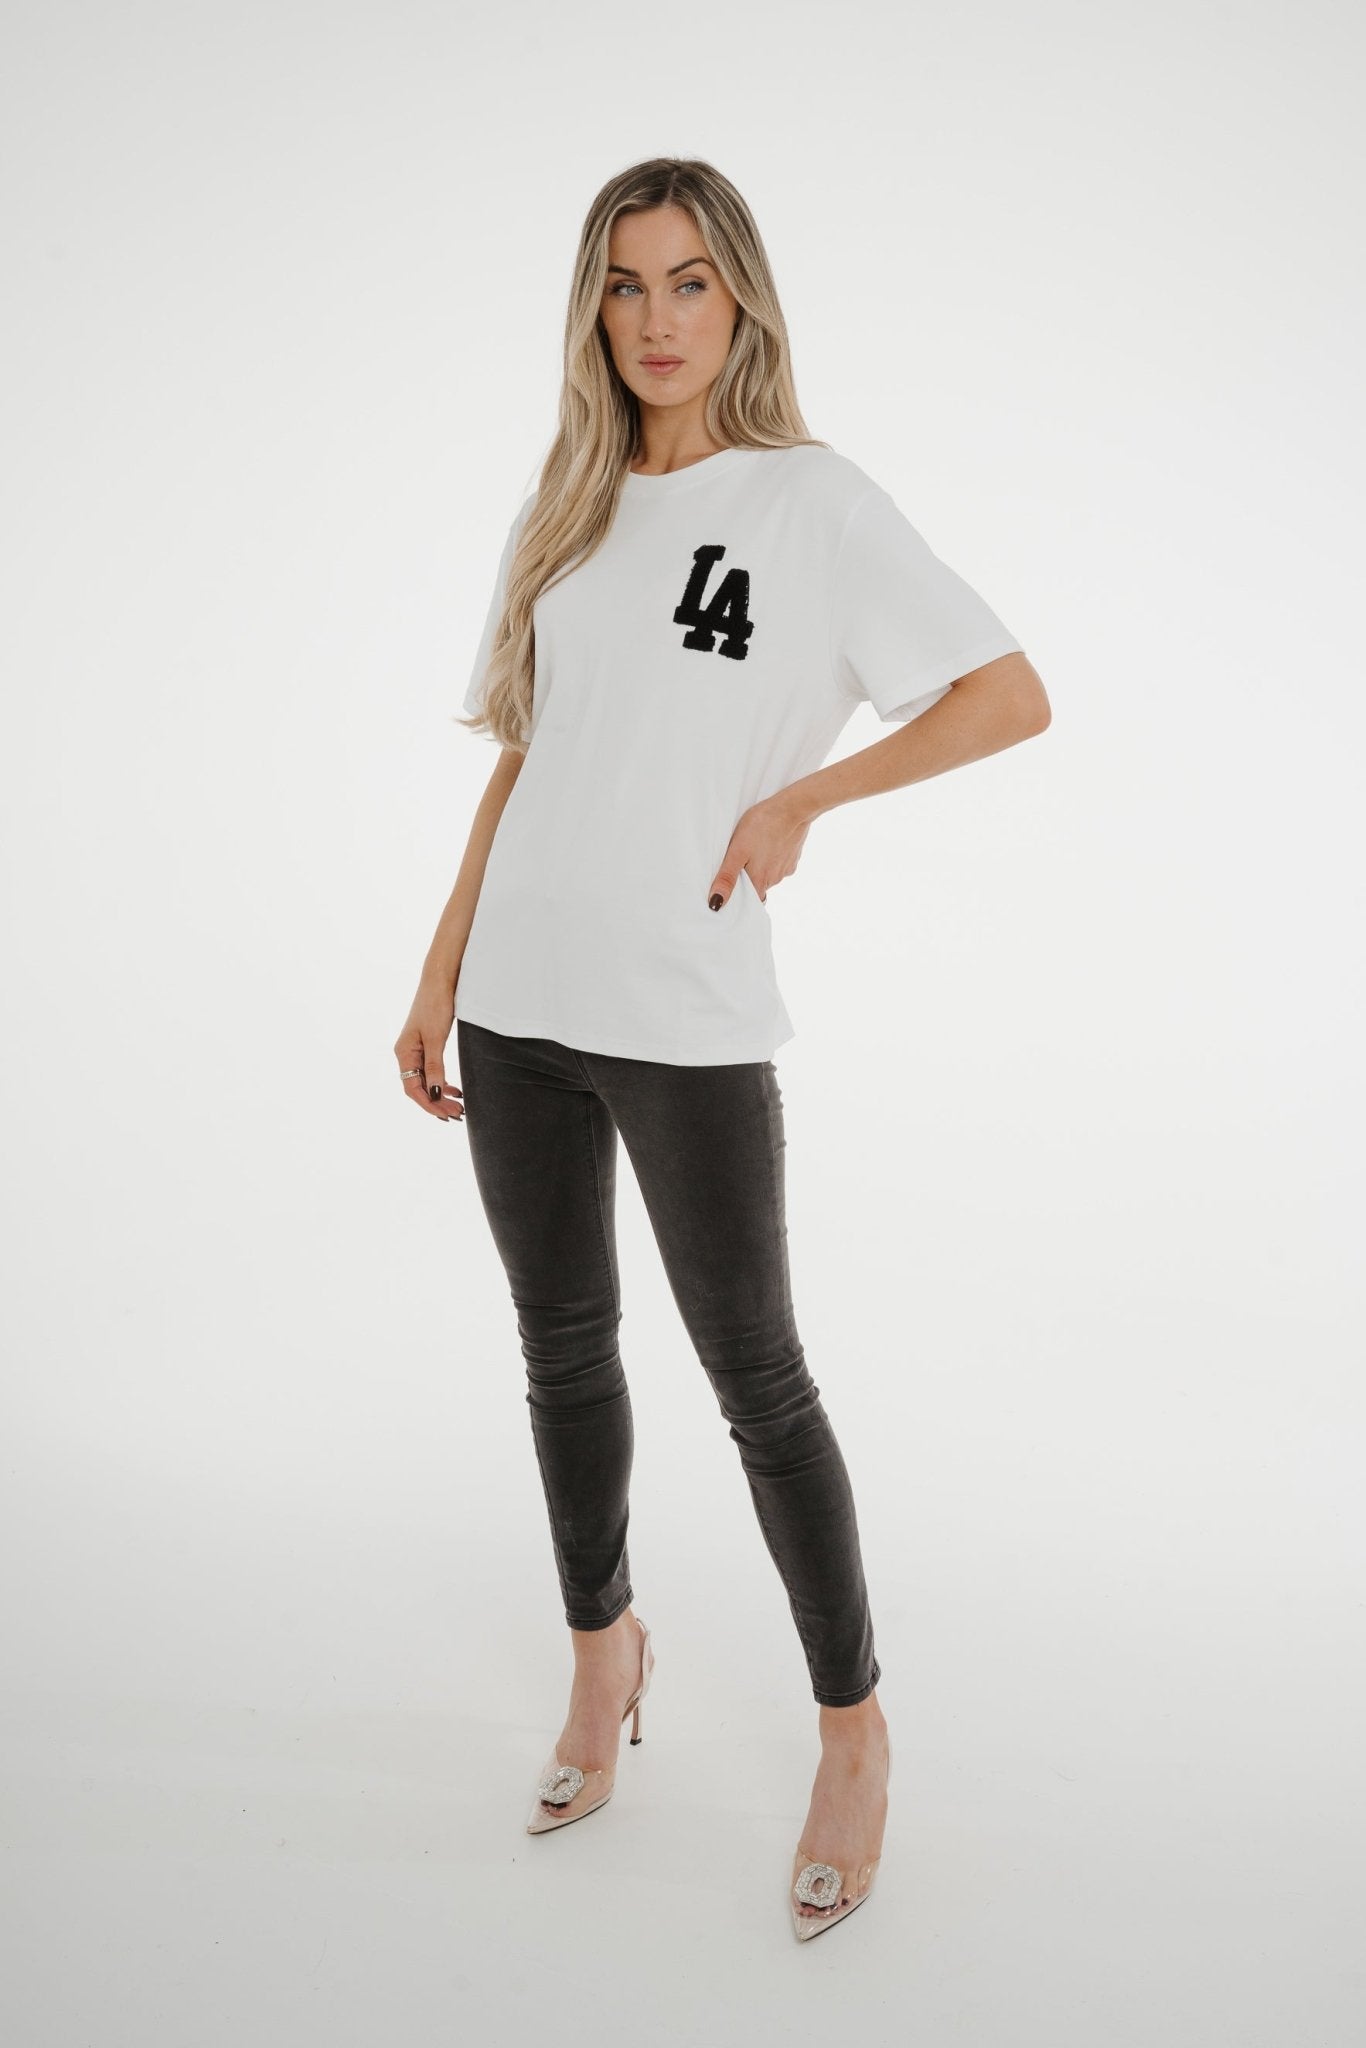 Millie LA Slogan T-Shirt In Black - The Walk in Wardrobe